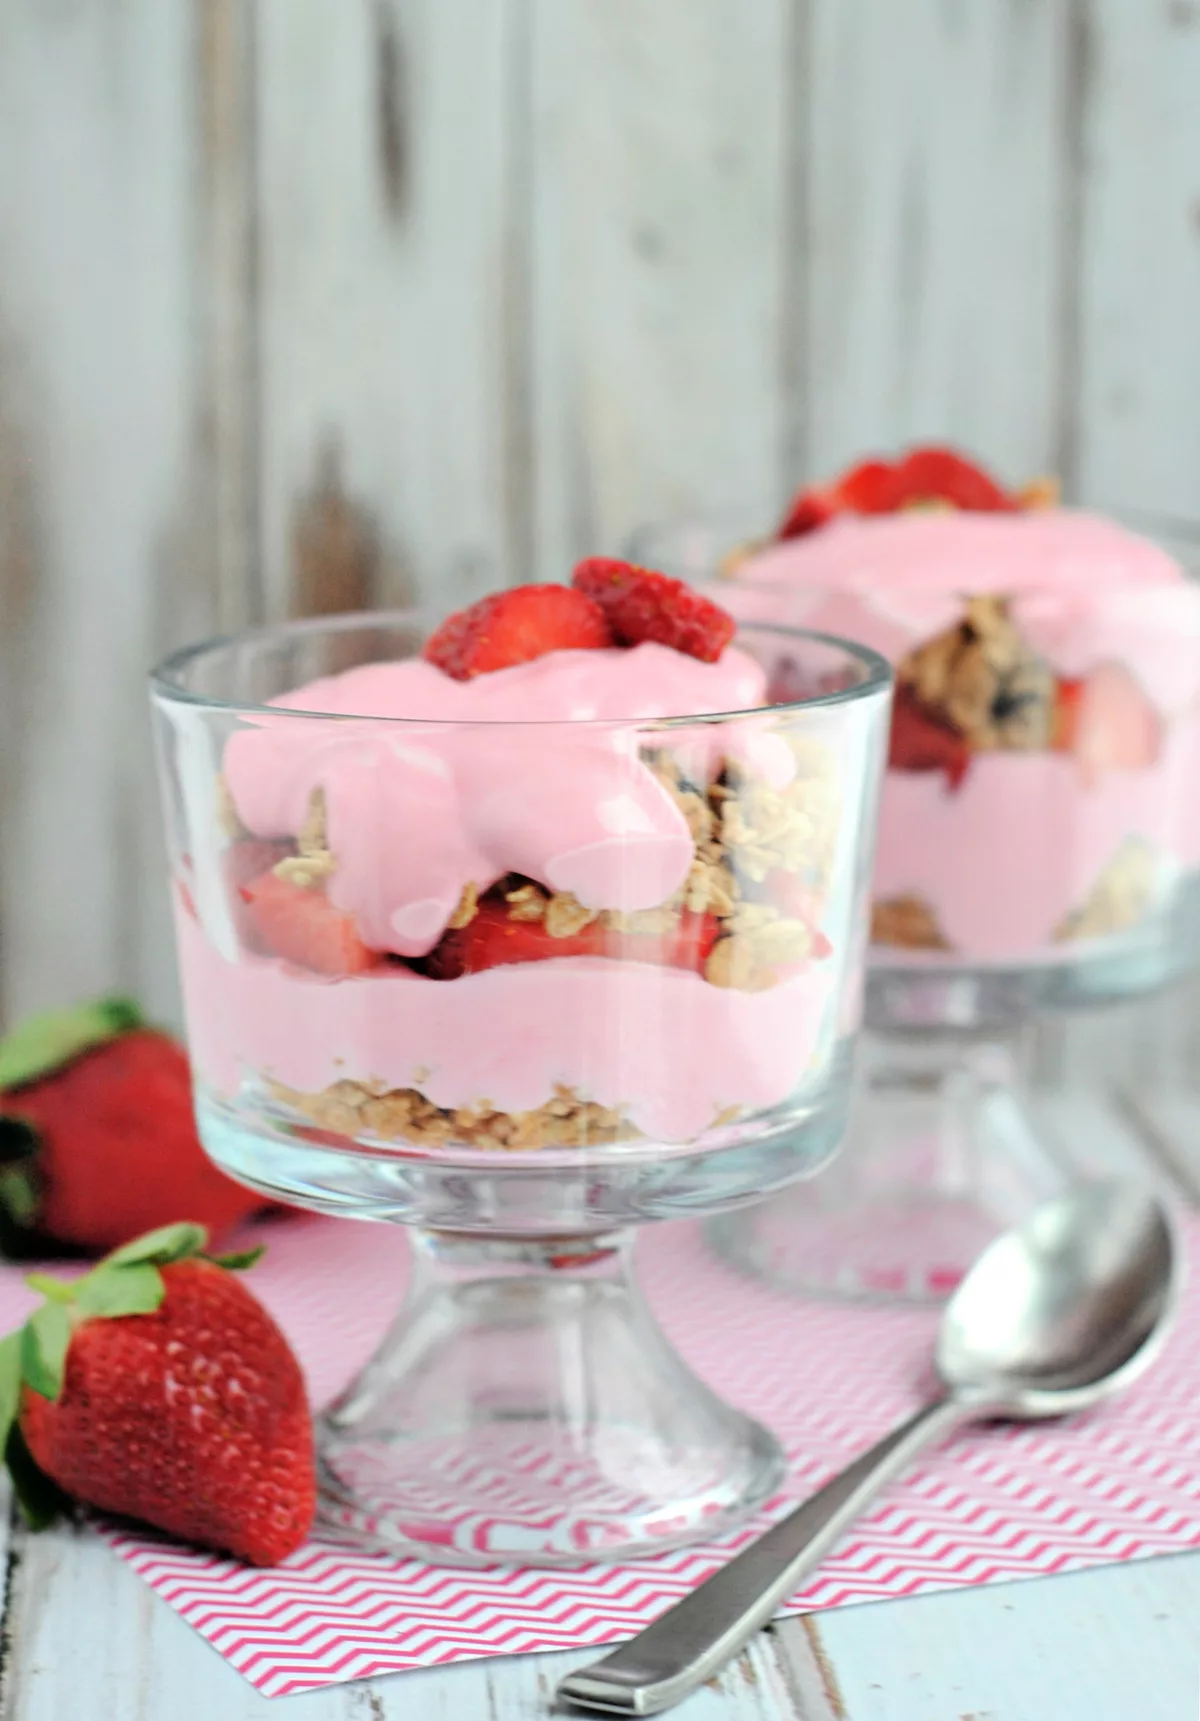 Strawberry Yogurt with Granola